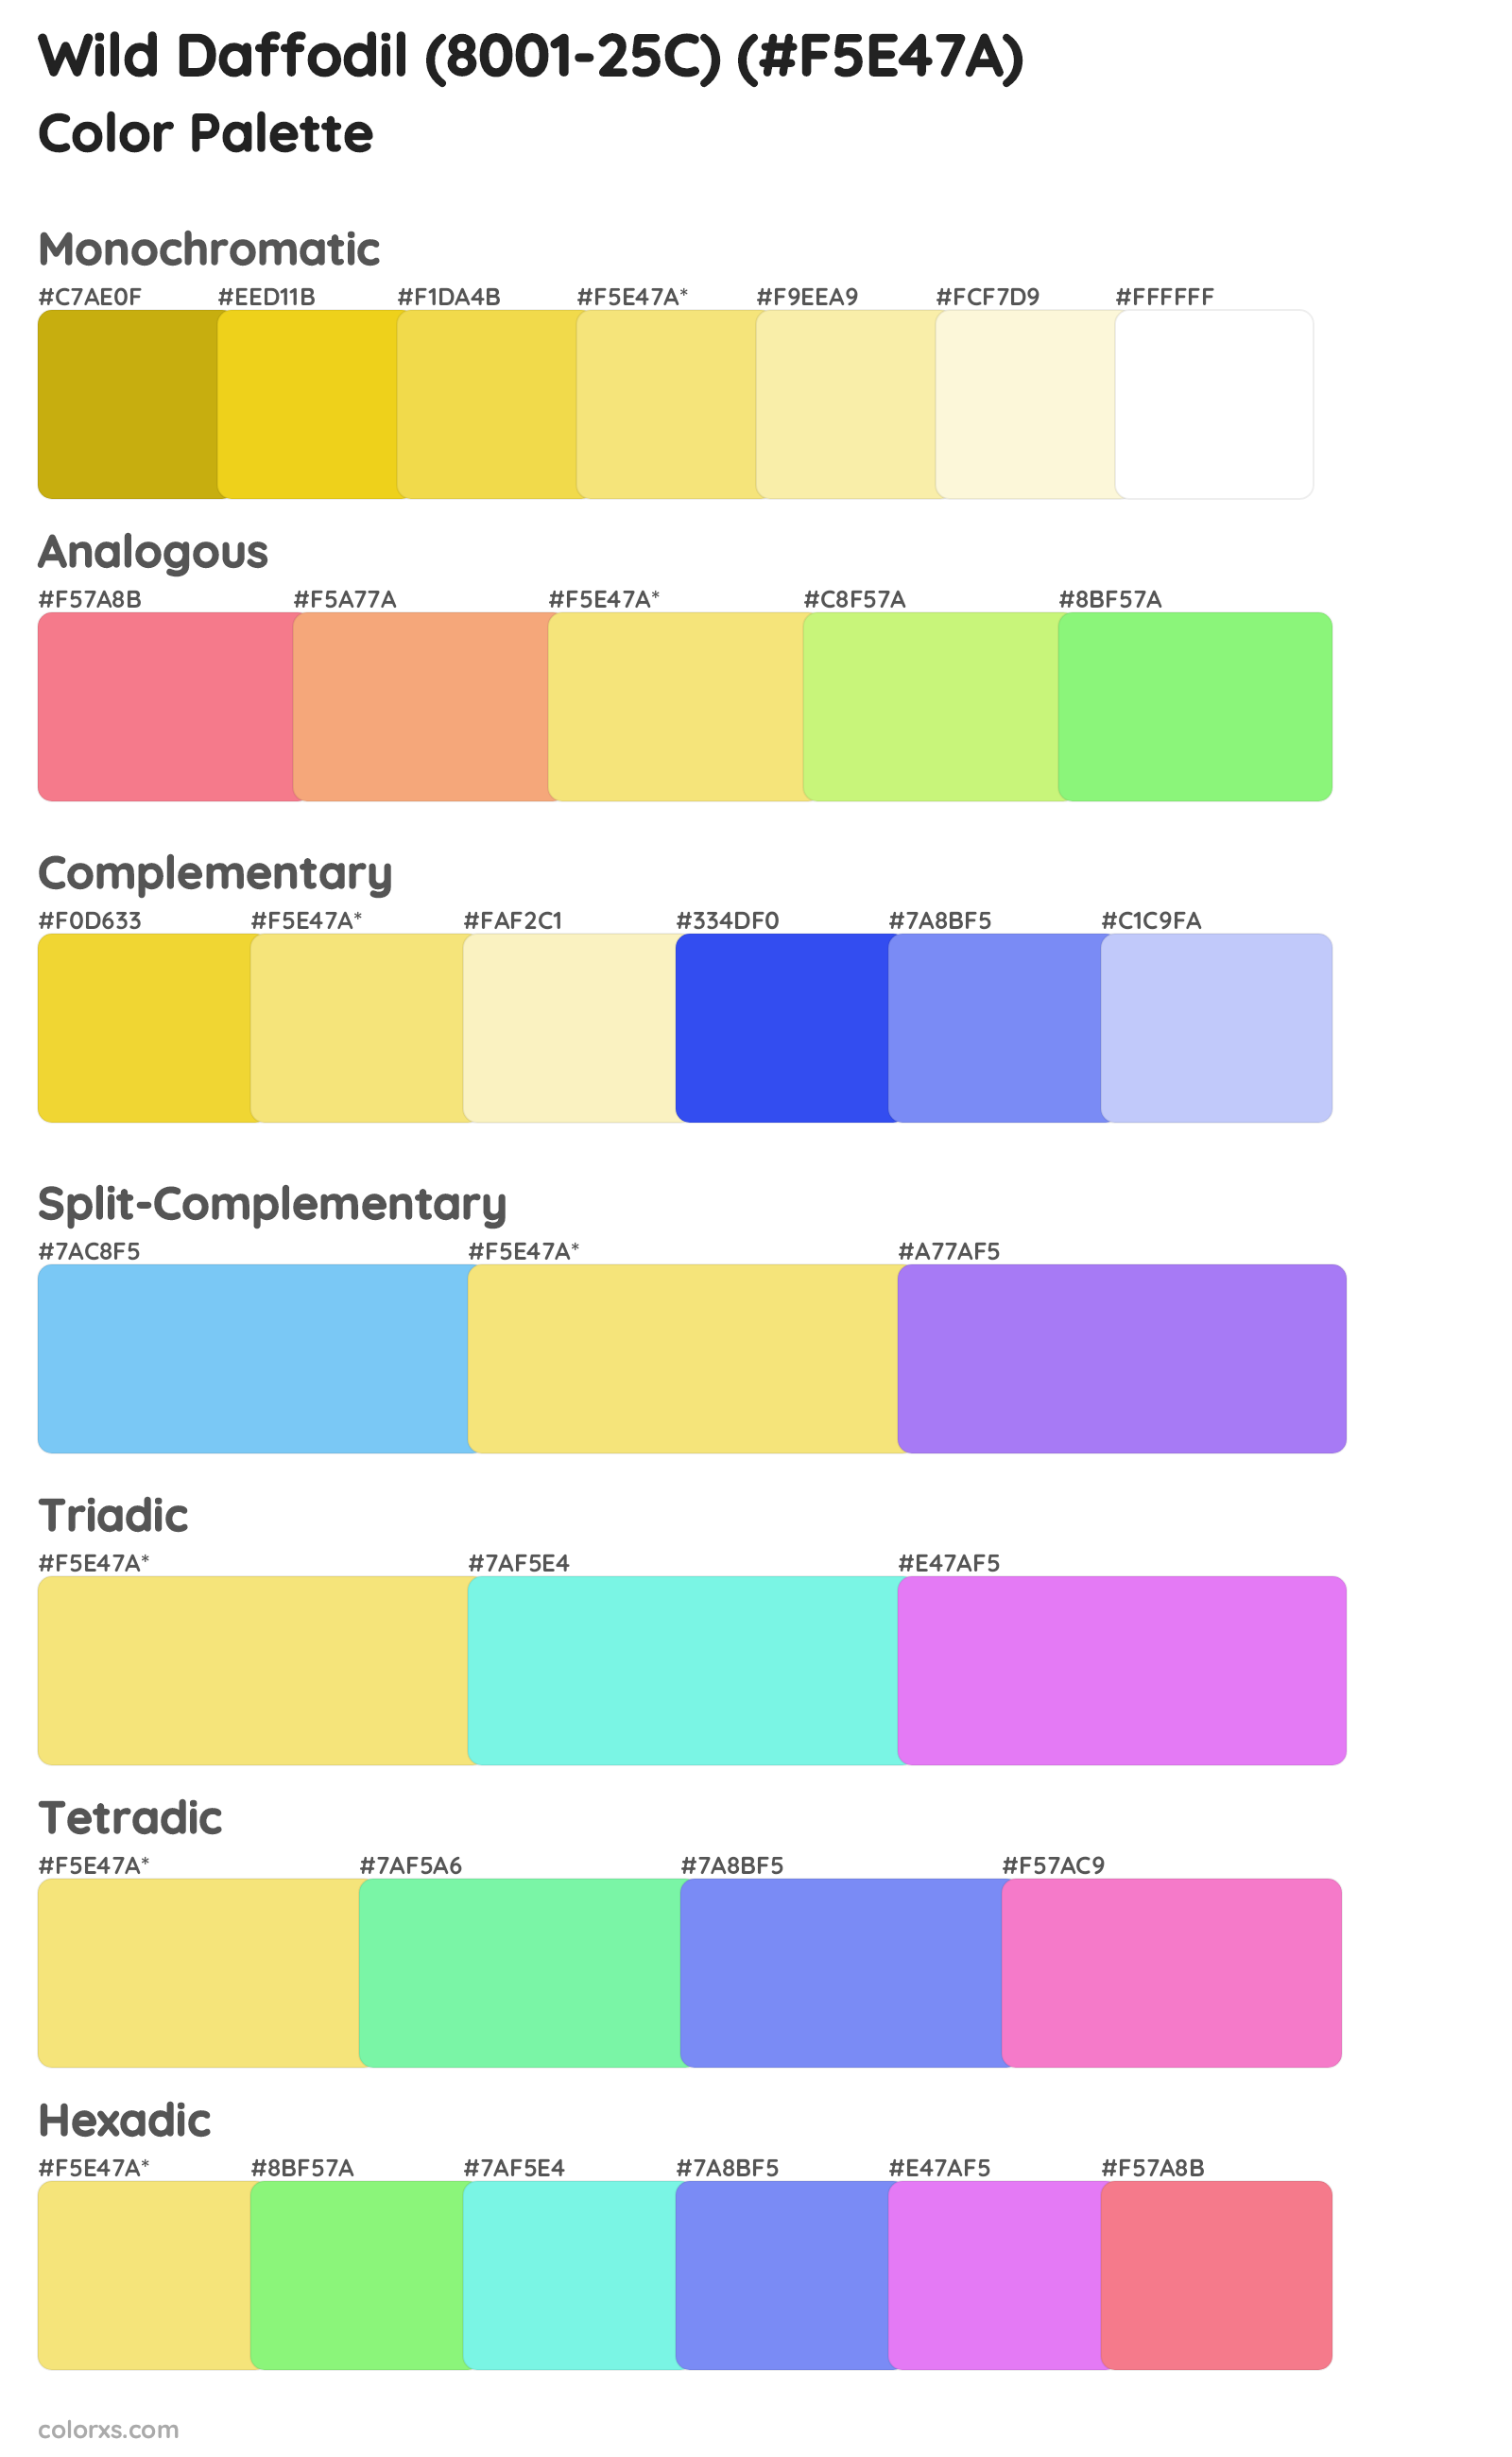 Wild Daffodil (8001-25C) Color Scheme Palettes